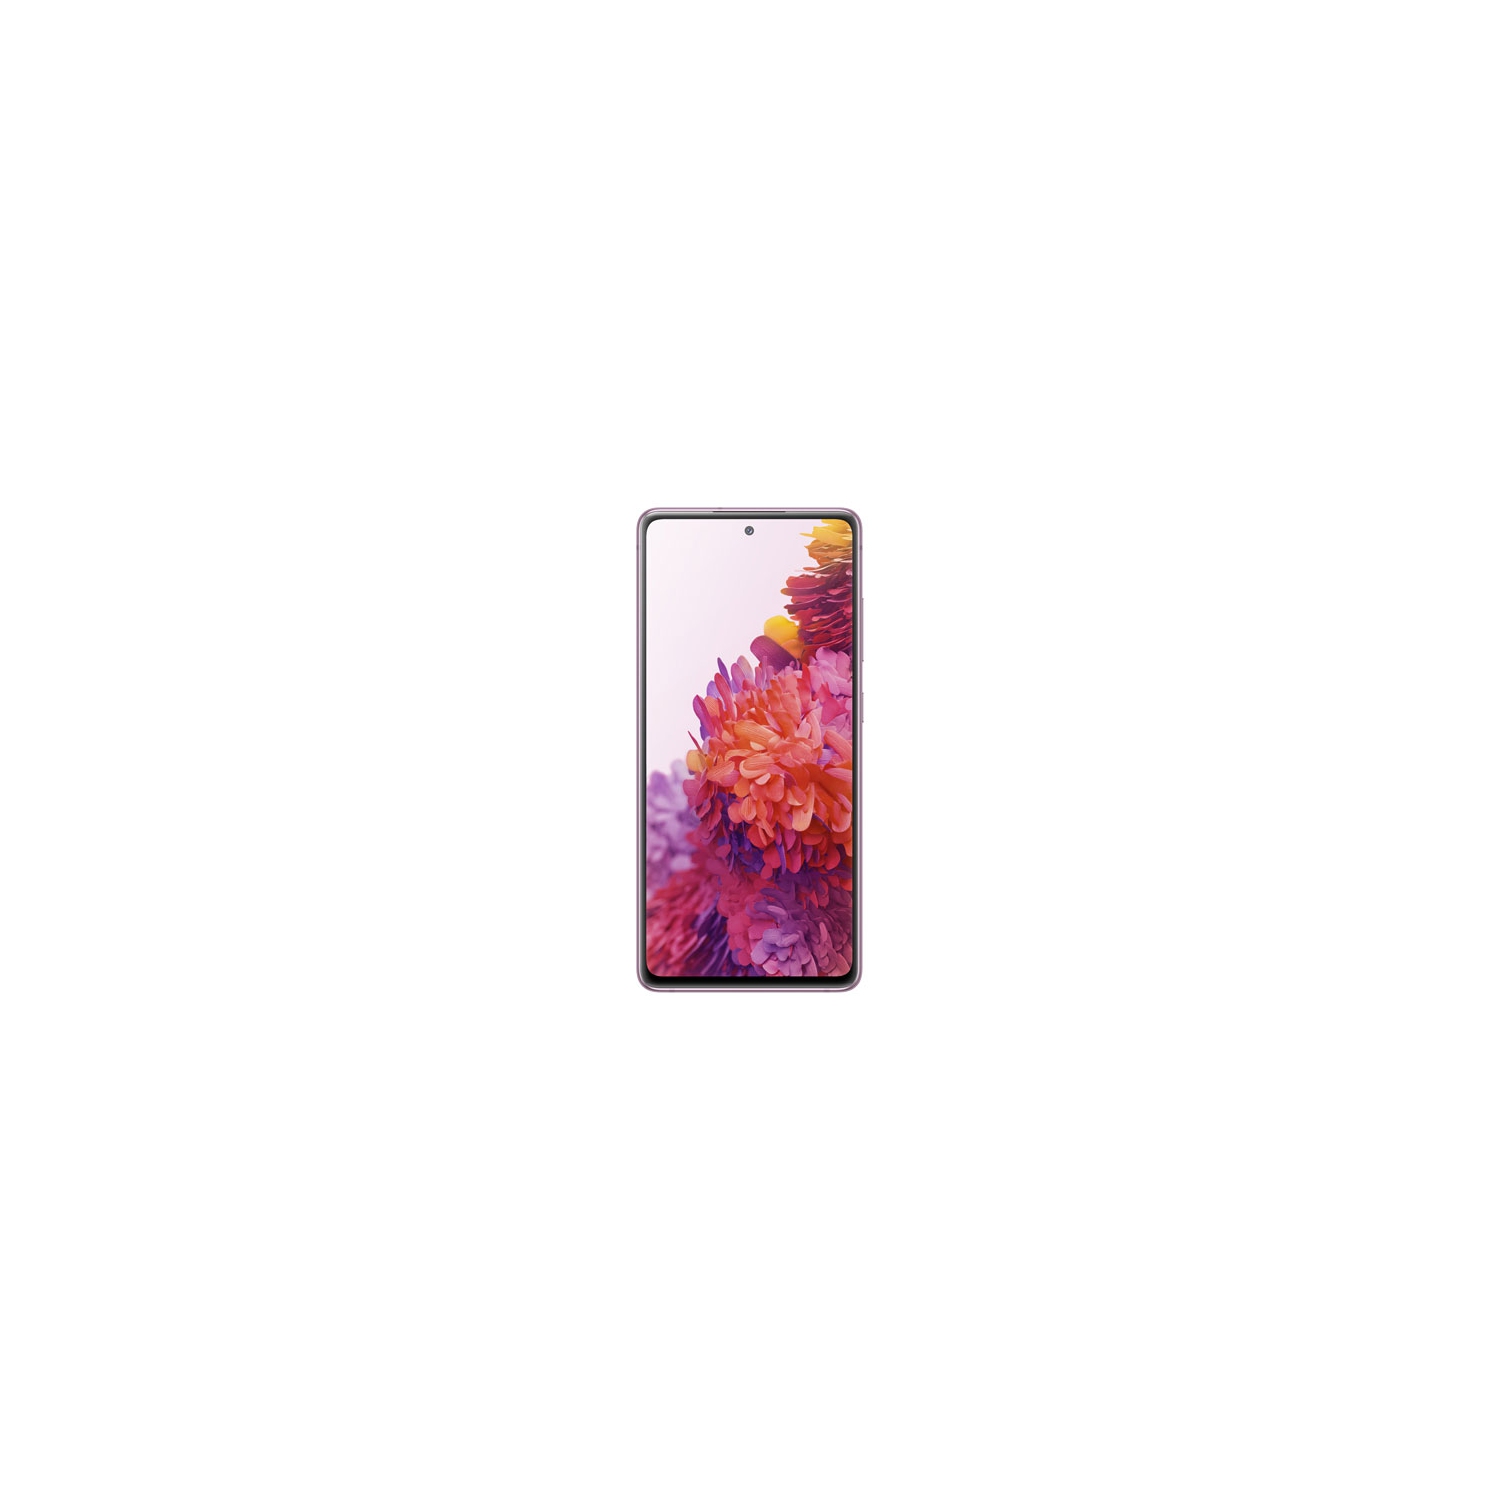 Samsung Galaxy S20 FE 5G 128GB Smartphone - Cloud Lavender - Unlocked - Certified Refurbished